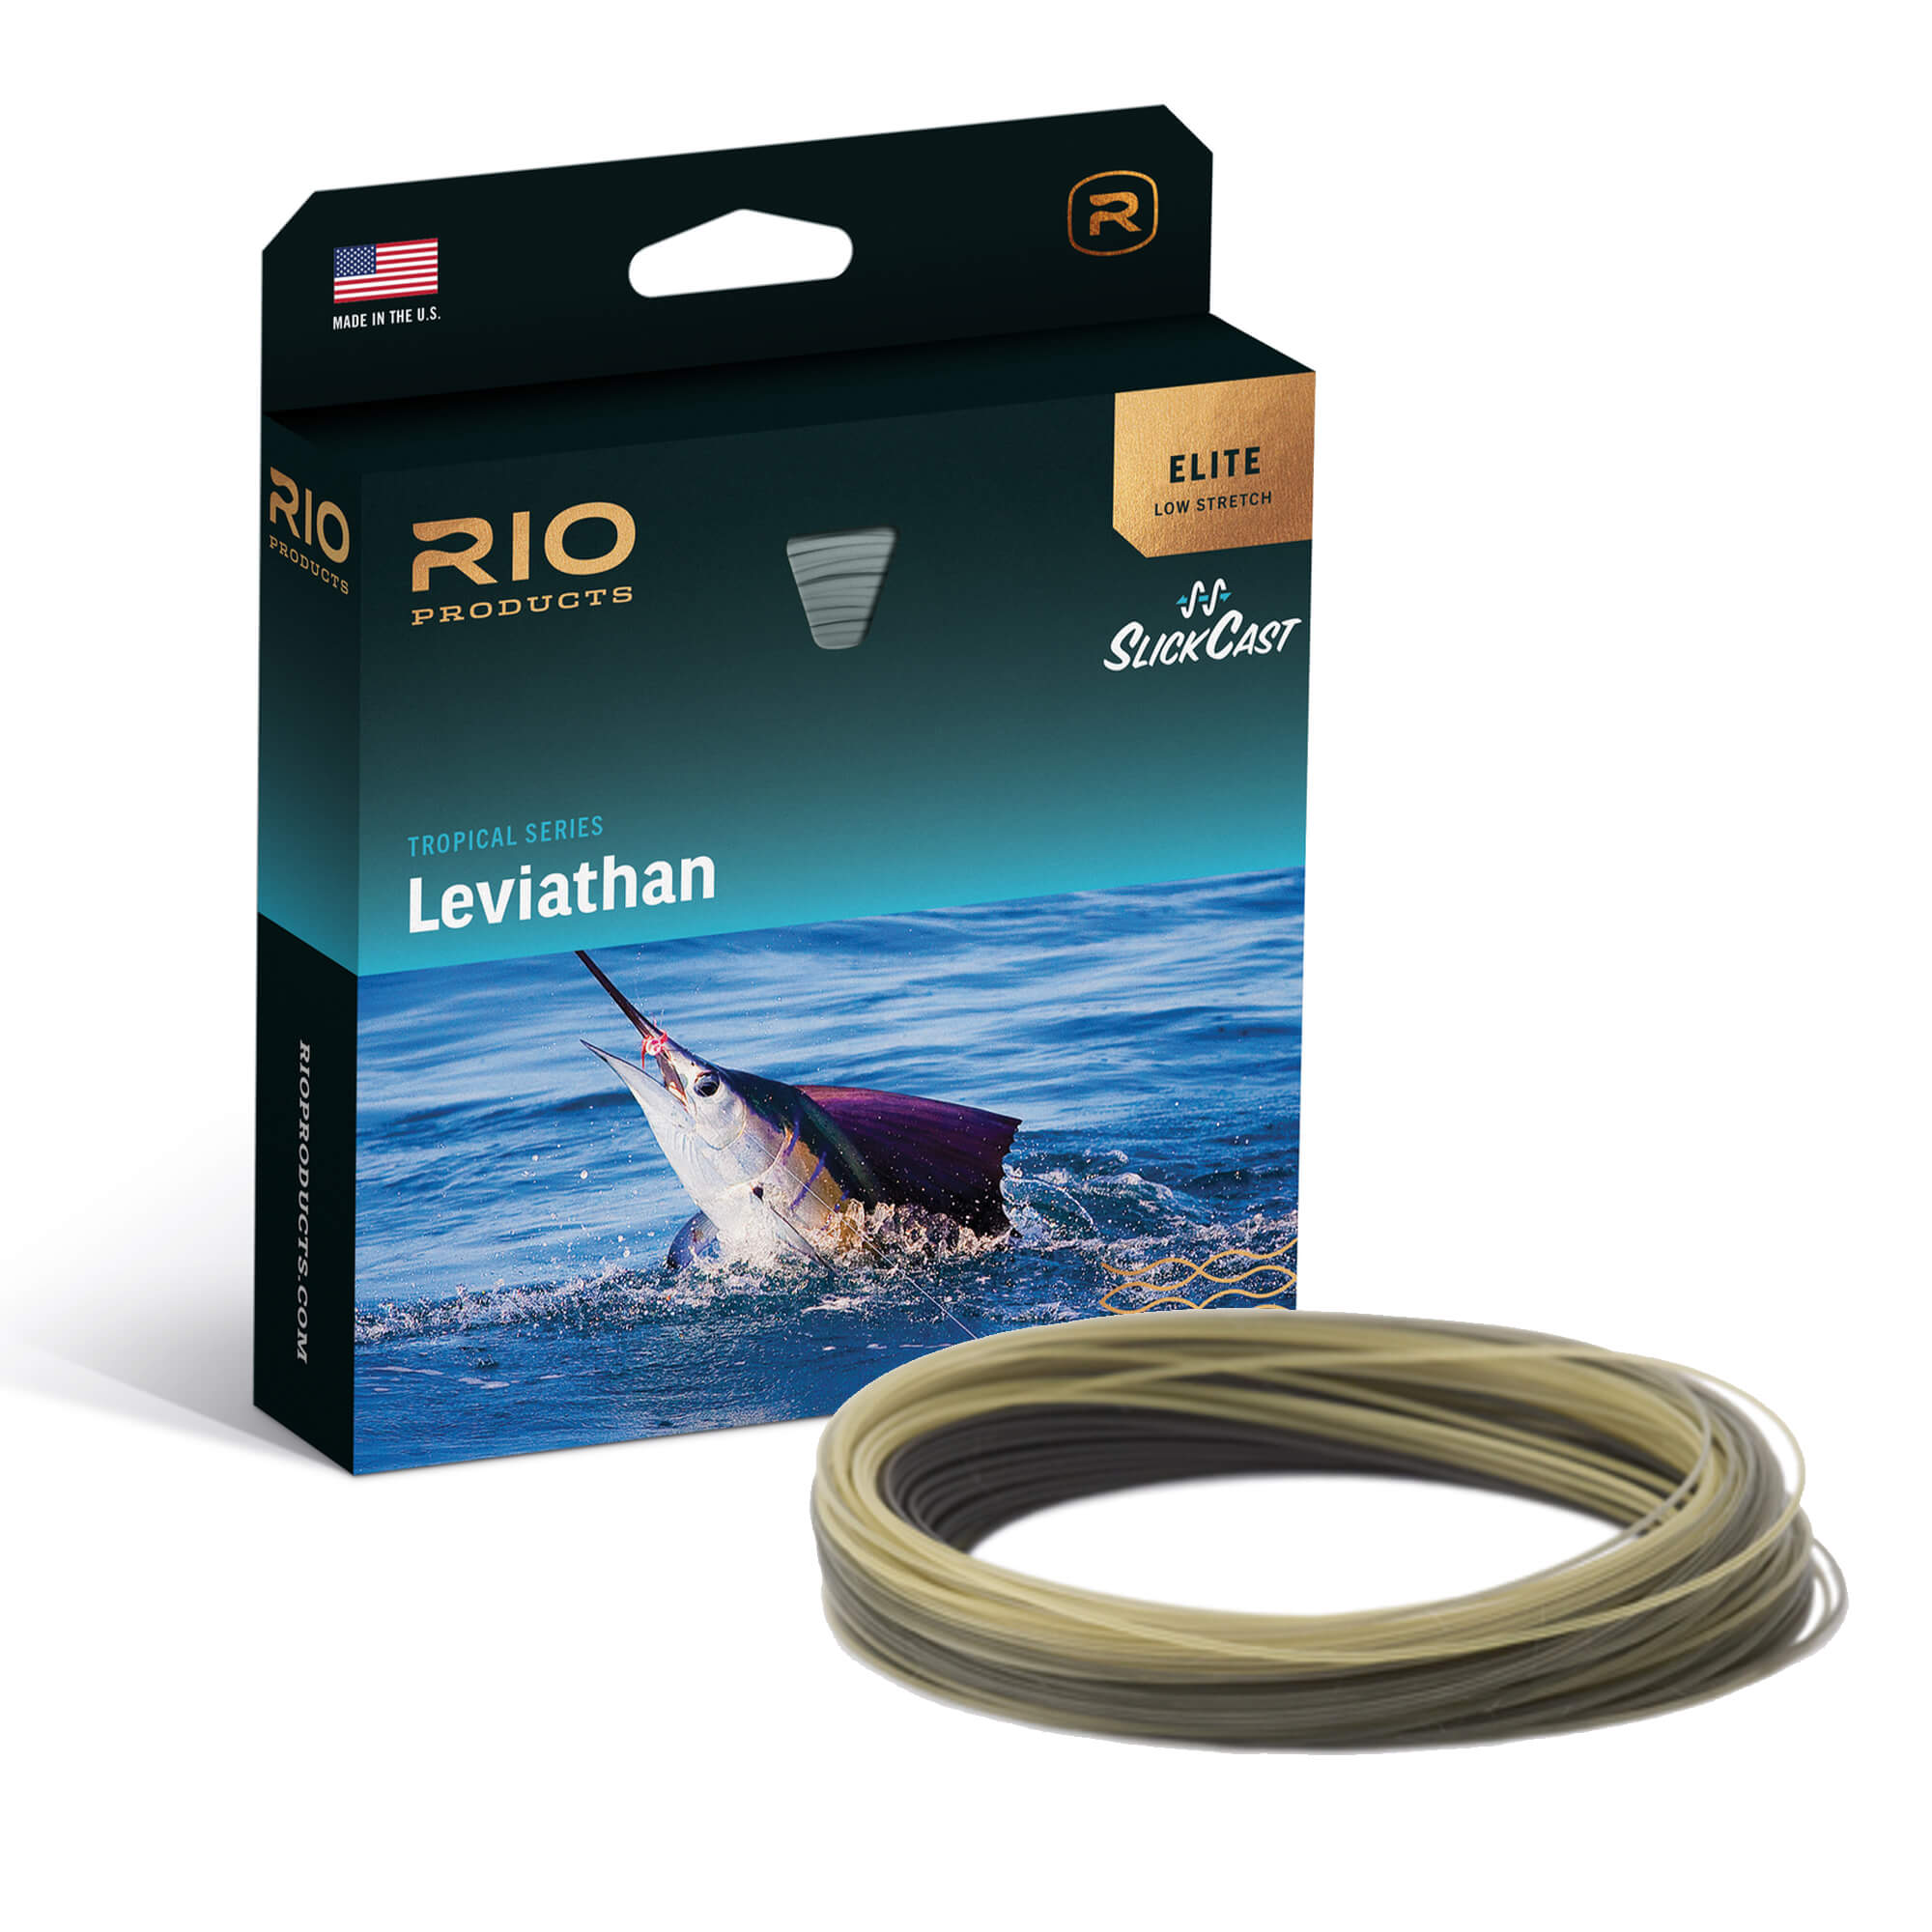 https://www.guideflyfishing.co.uk/wp-content/uploads/2022/01/RIO-ELITE-LEVIATHAN-BOX-SPOOL-copy.jpg